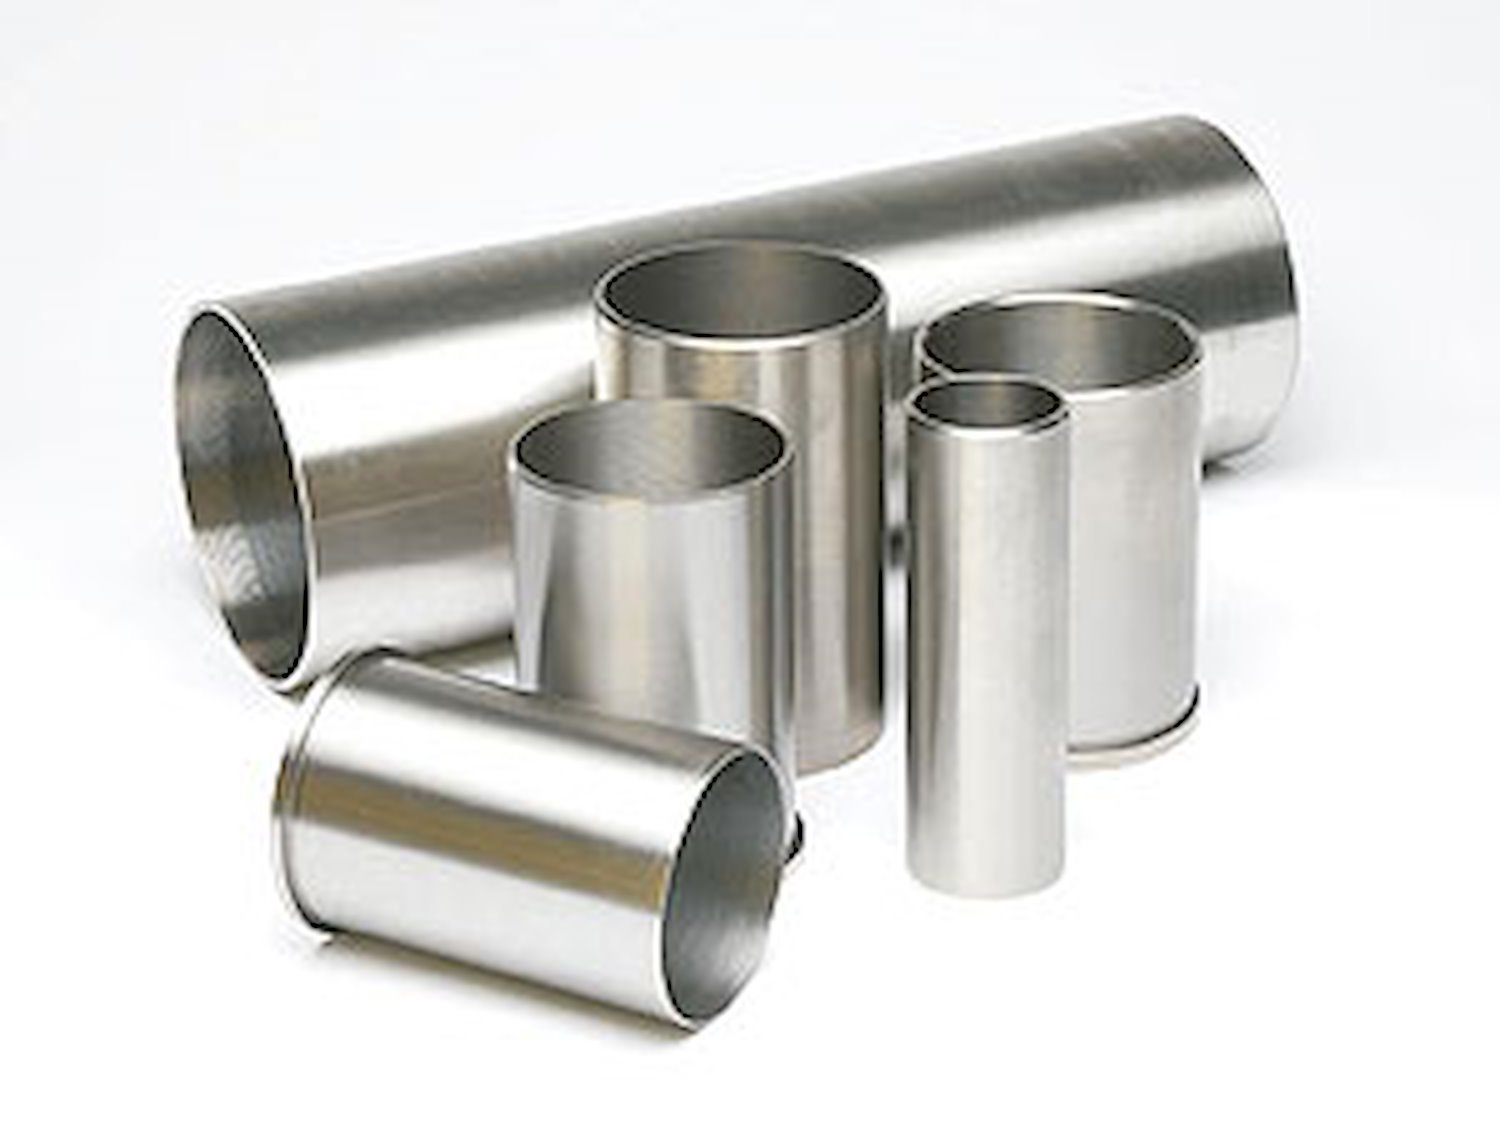 Cylinder Sleeve Bore: 4.0937"